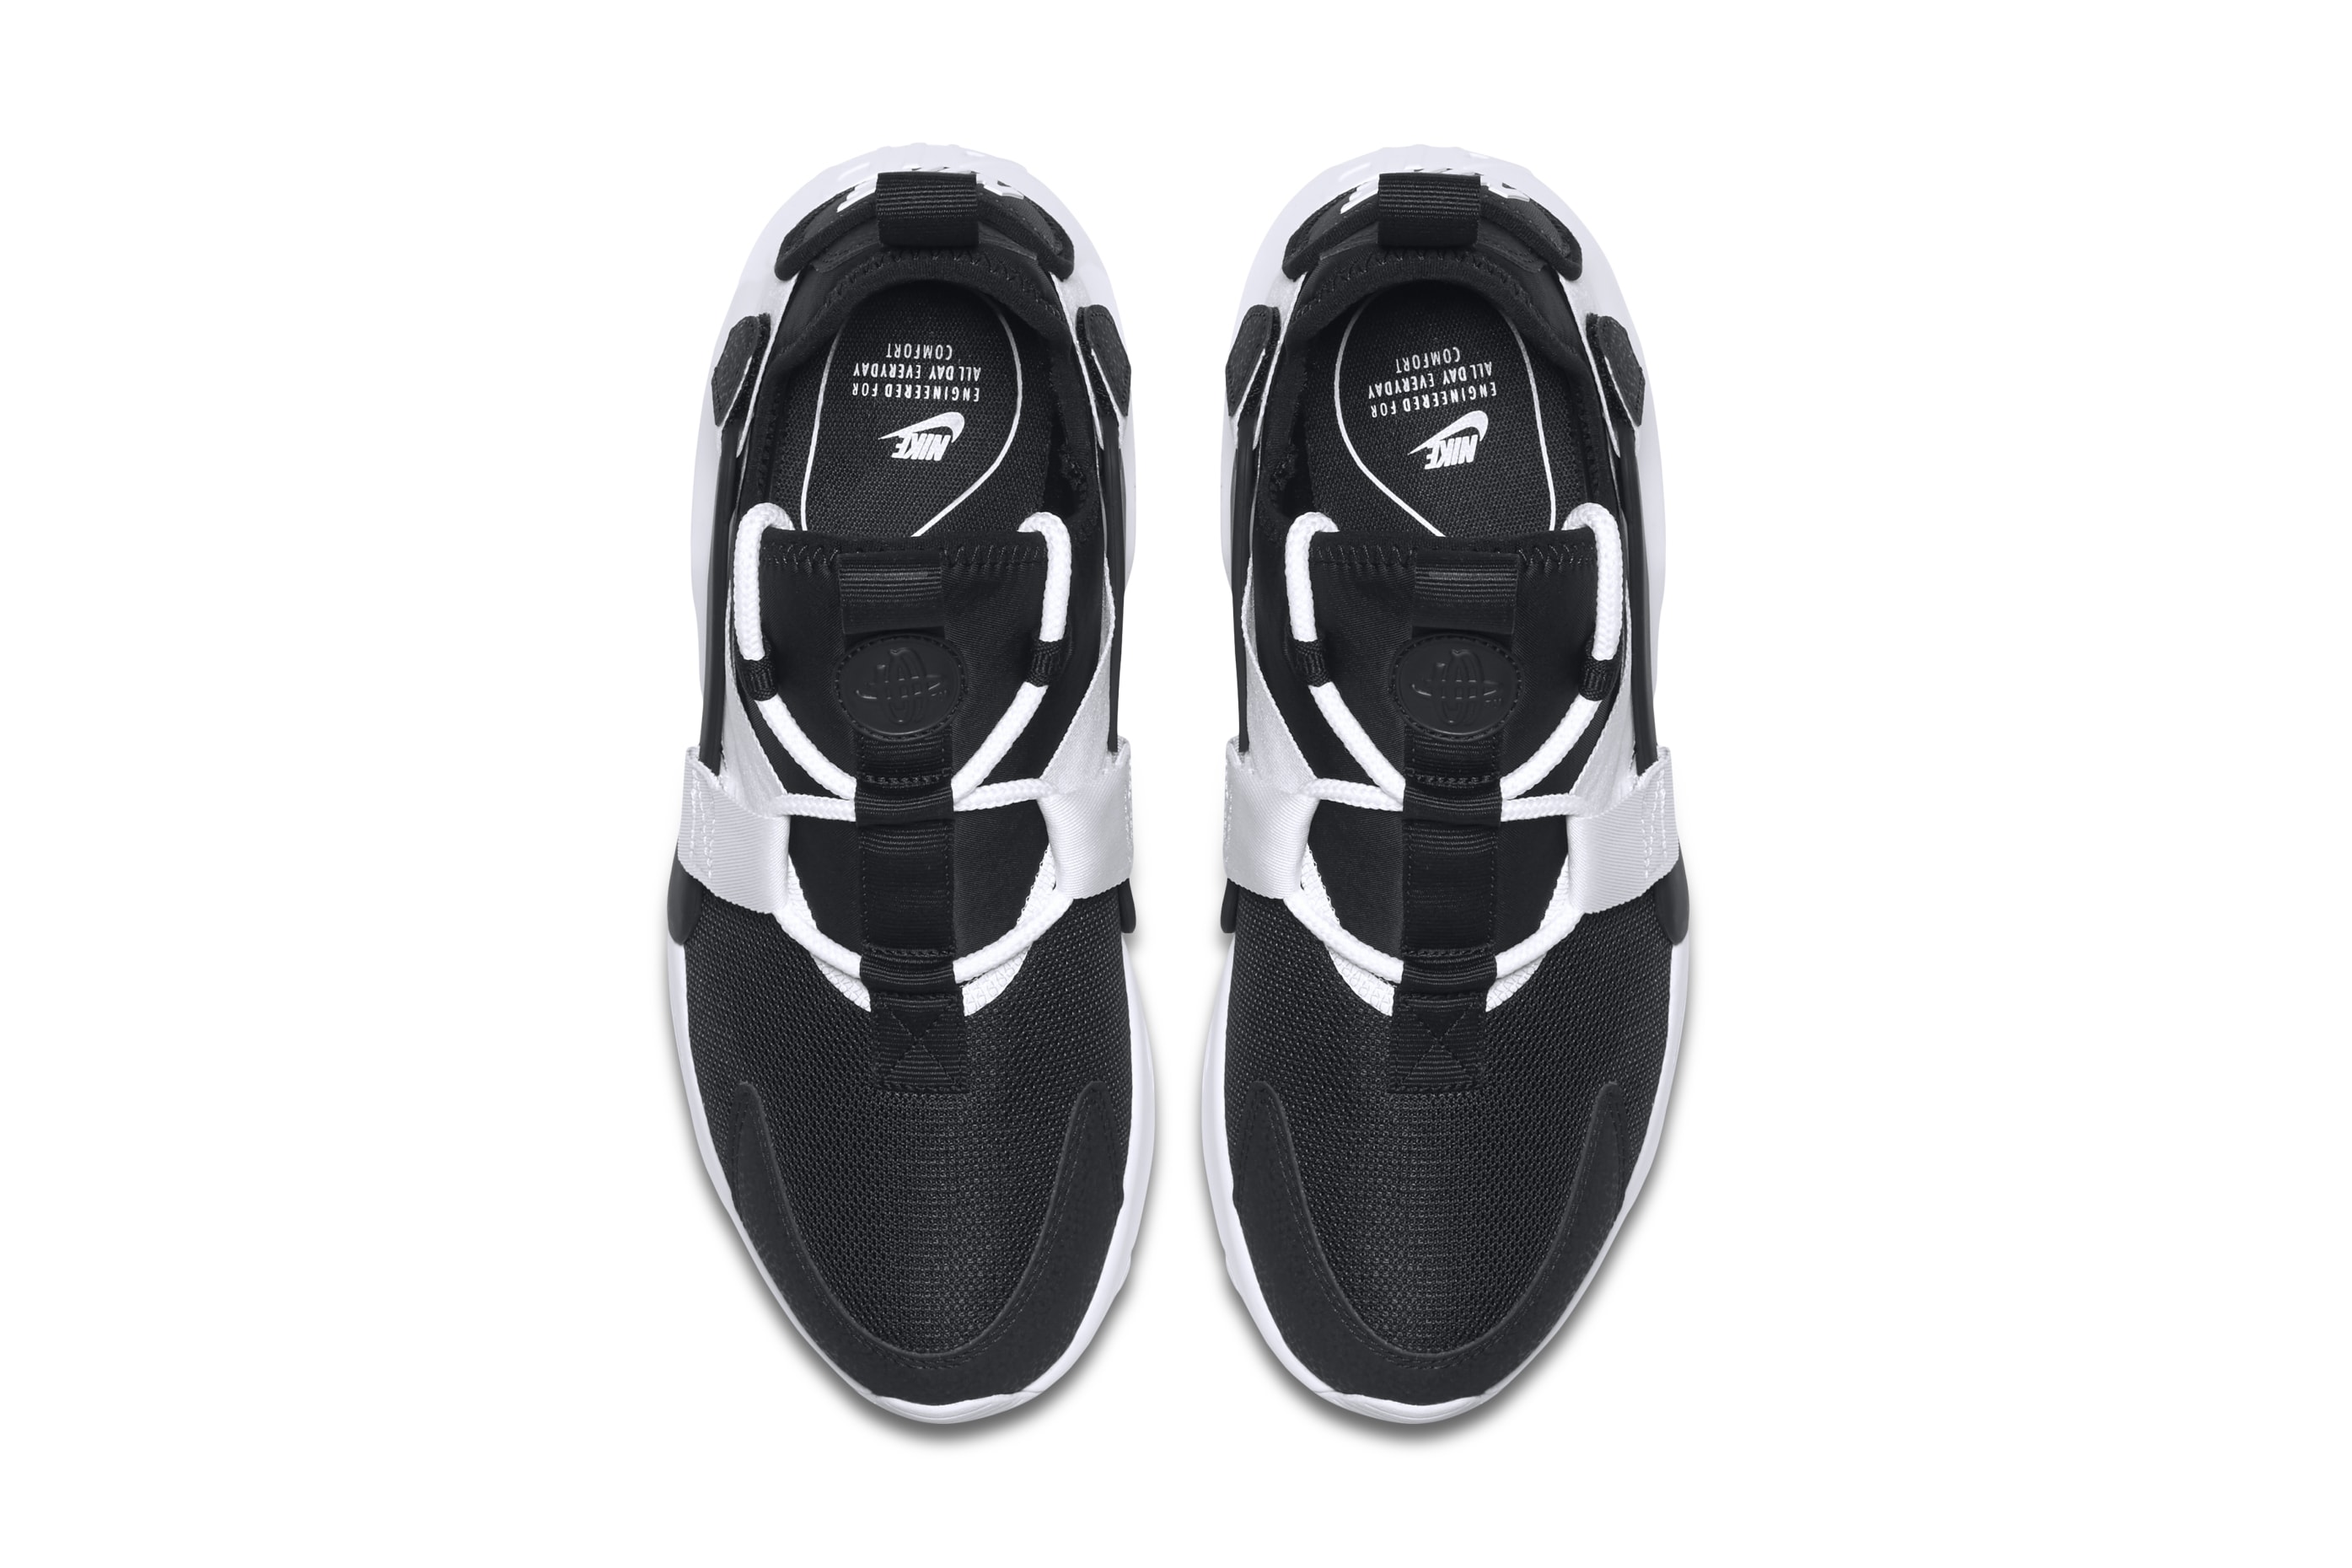 Nike Air Huarache City Low Sneaker Silhouette Shoe Khaki Particle Rose Black White Sole Retro Silhouette Street Style Shoe